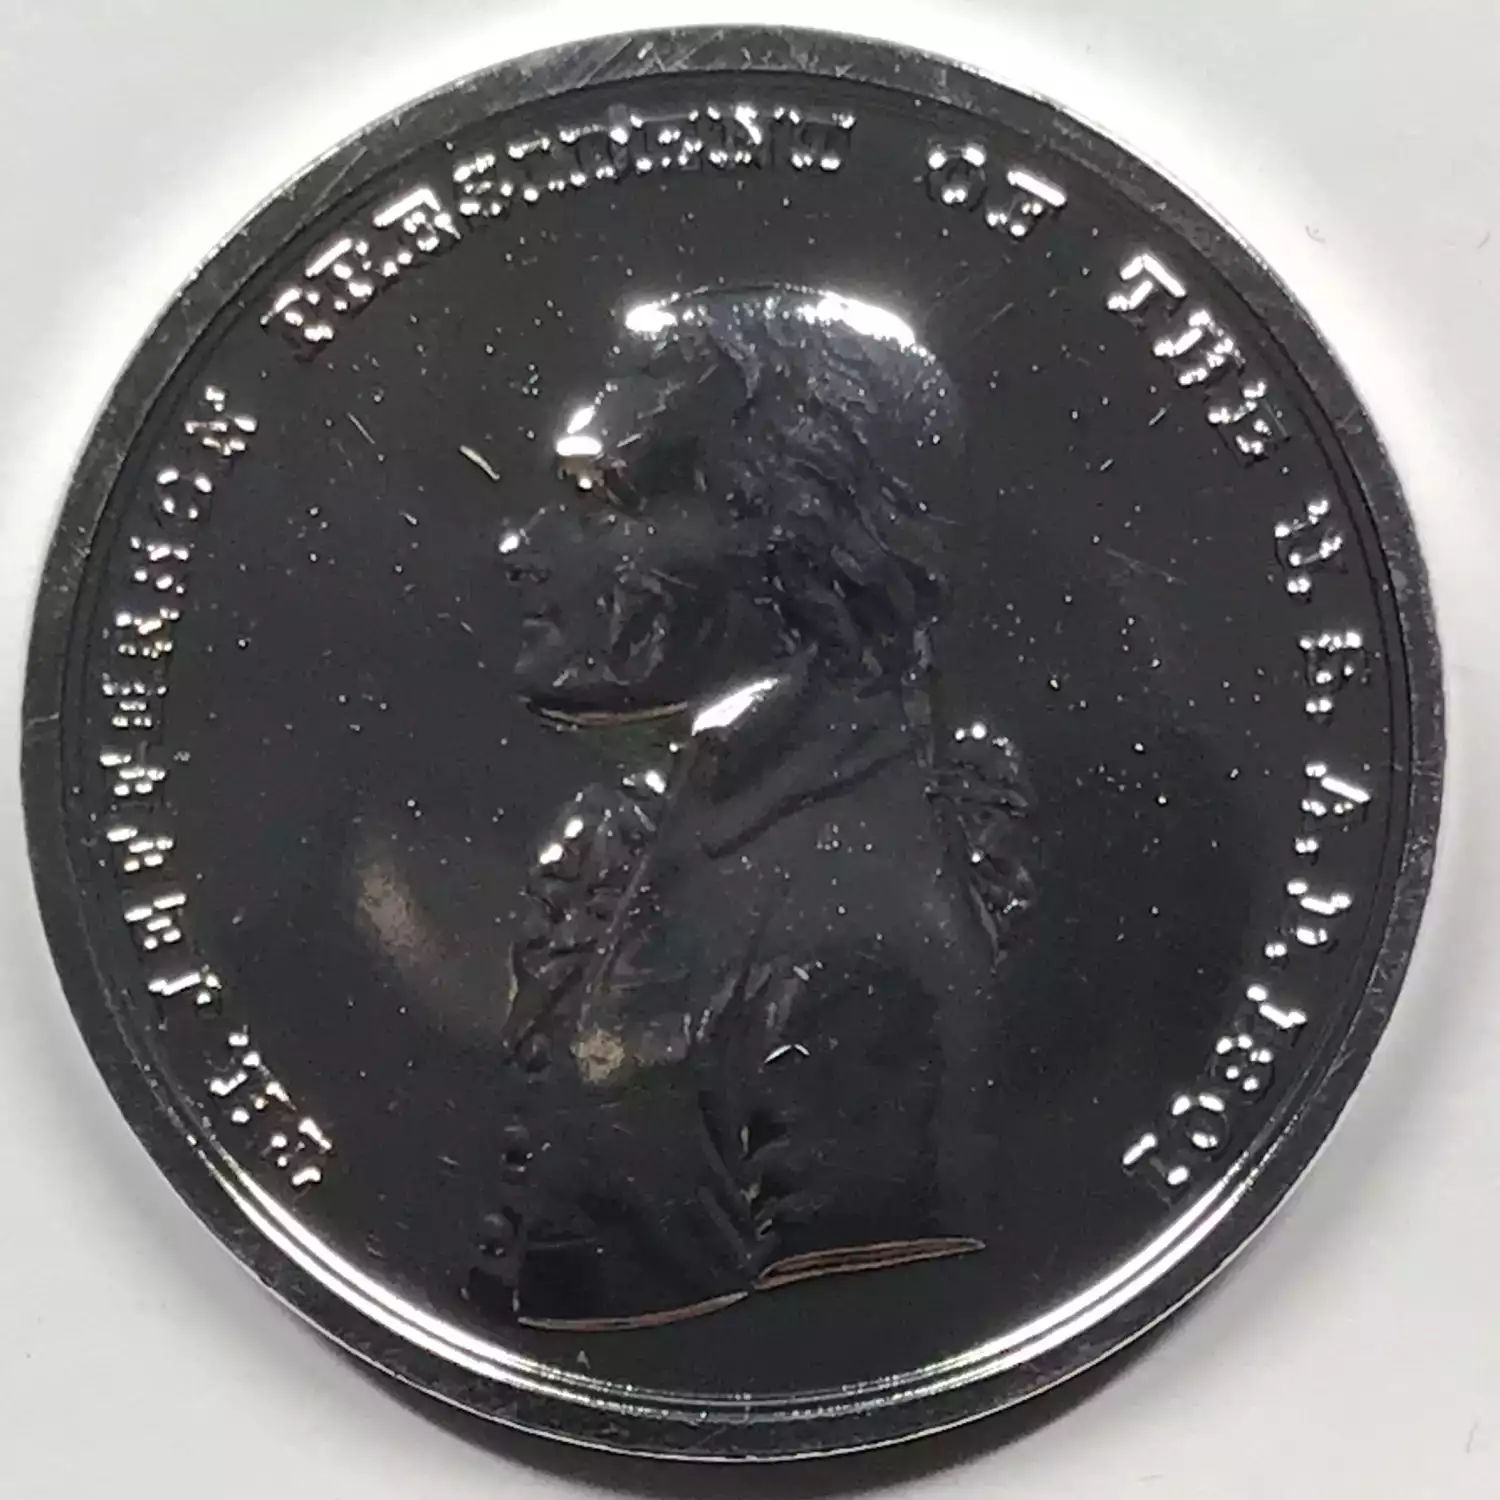 2005 Westward Journey Nickel Series Coin & Medal Set - Peace Friendship Medal (4)